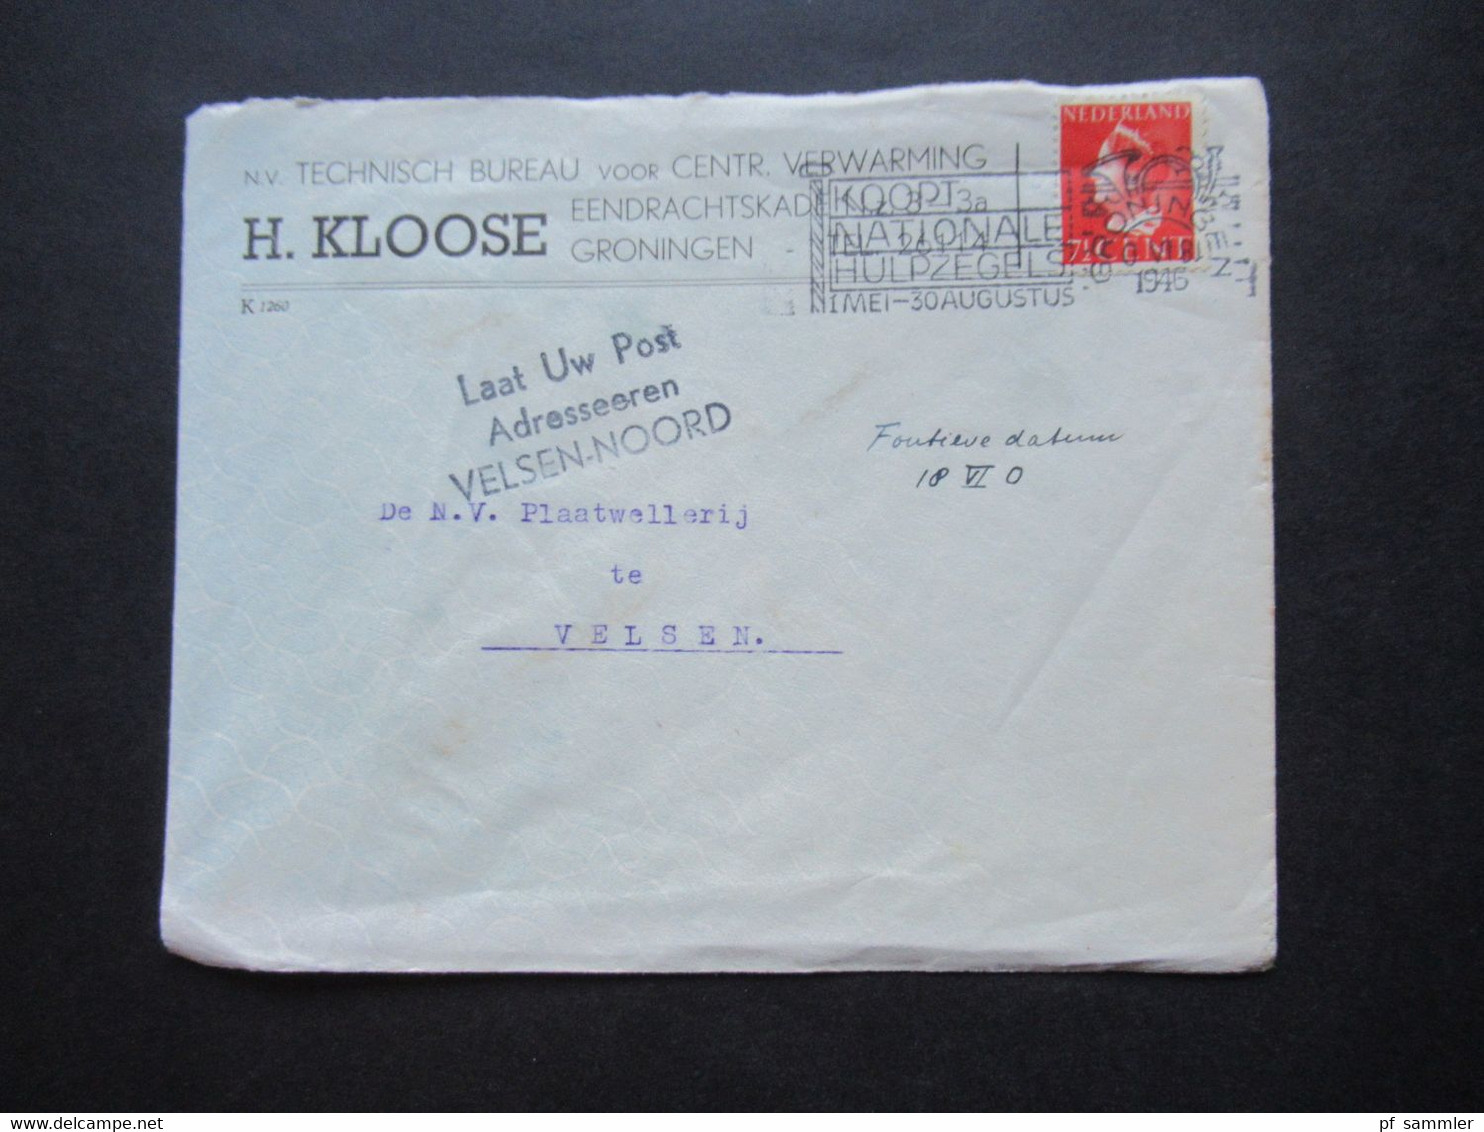 Niederlande 1940 Verwendet 1946 Königin Wilhelmina Nr.342 EF Nebenstempel L3 Laat Uw Post Adresseeren Velsen - Noord - Briefe U. Dokumente